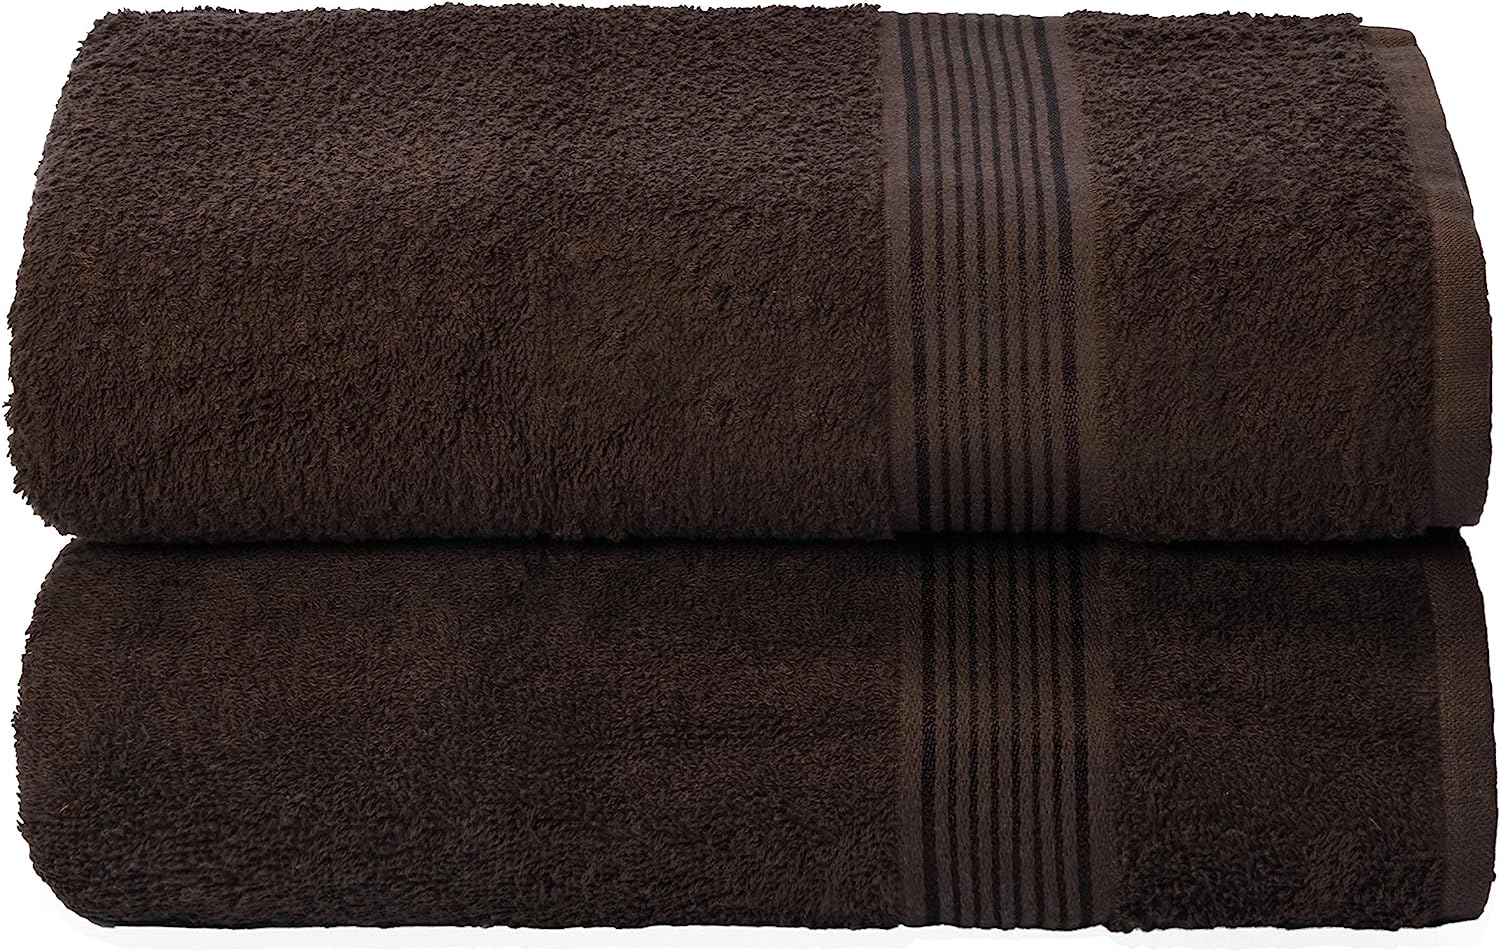 Belizzi Home Cotton 2 Pack Oversized Bath Towel Set 28x55 inches, Large Bath  Tow